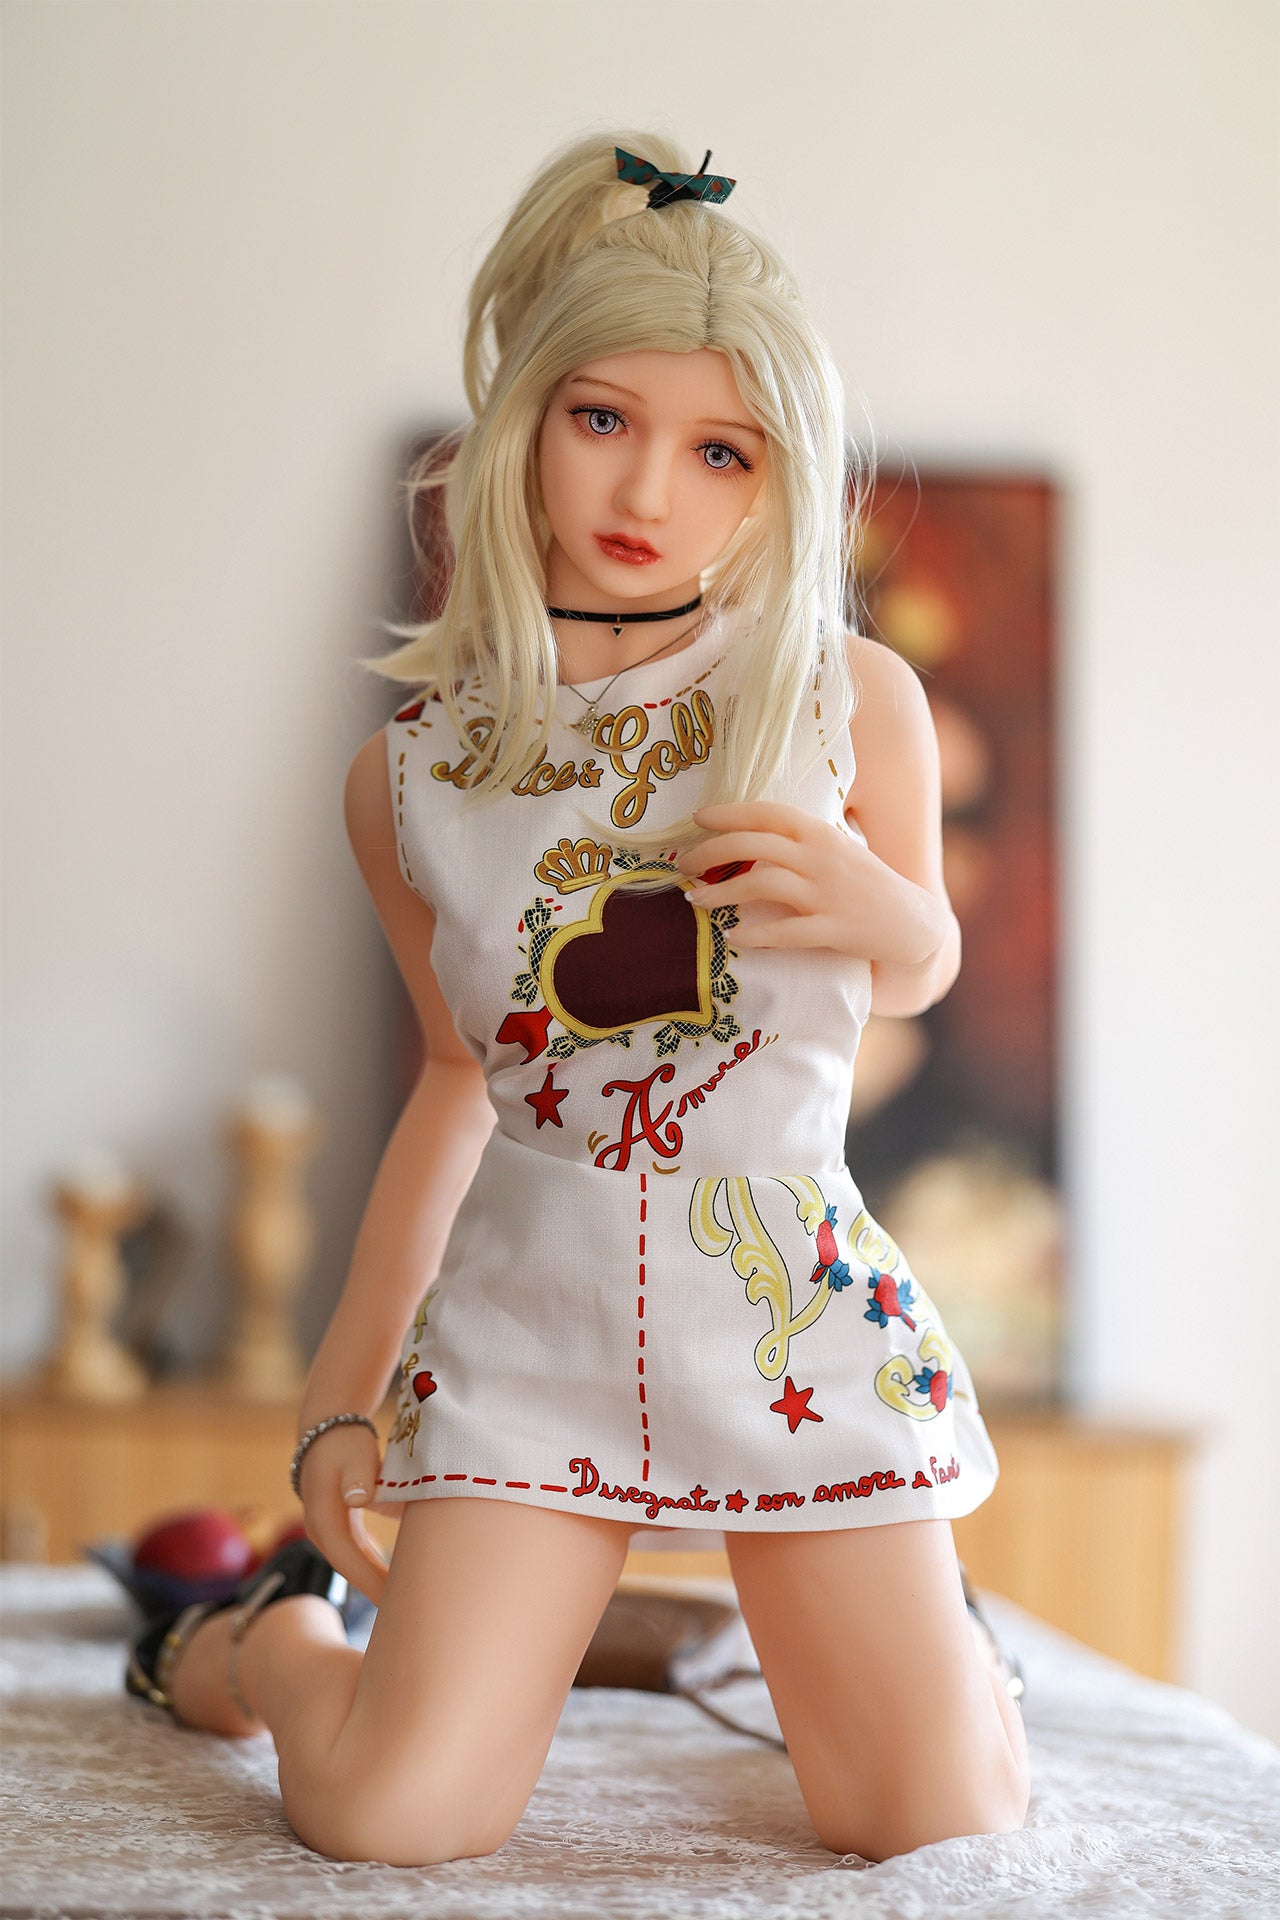 Alvin - Medium Size Angel Girl Lifelike Sex Doll - Sexindoll